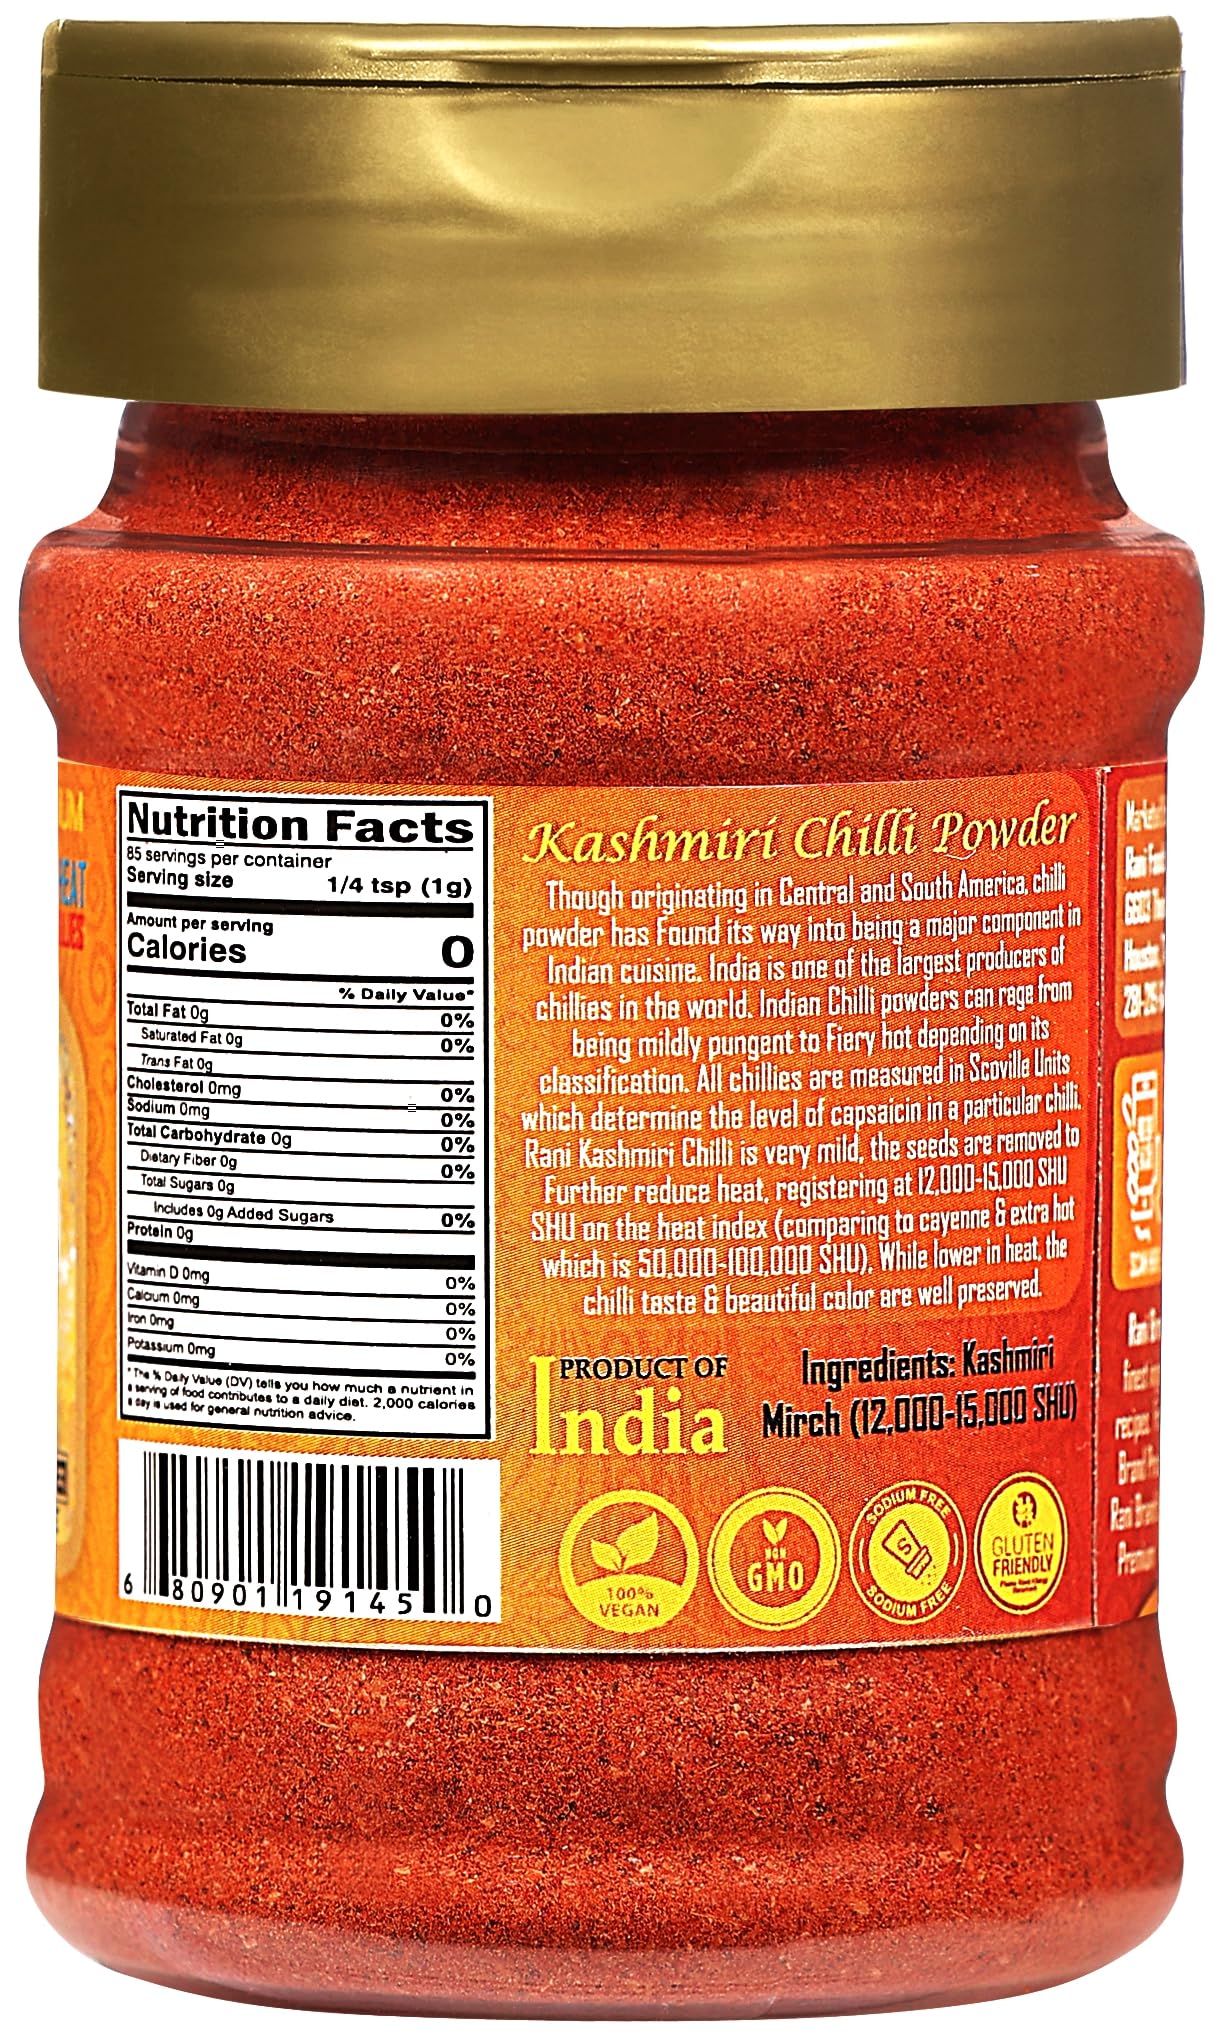 Rani Kashmiri Chilli Powder (Deggi Mirch, Low Heat) Ground Indian Spice 85g PET Jar ~ All Natural | Salt-Free | Vegan | Kosher | Gluten Friendly | Perfect for Deviled Eggs & Other Low Heat Dishes